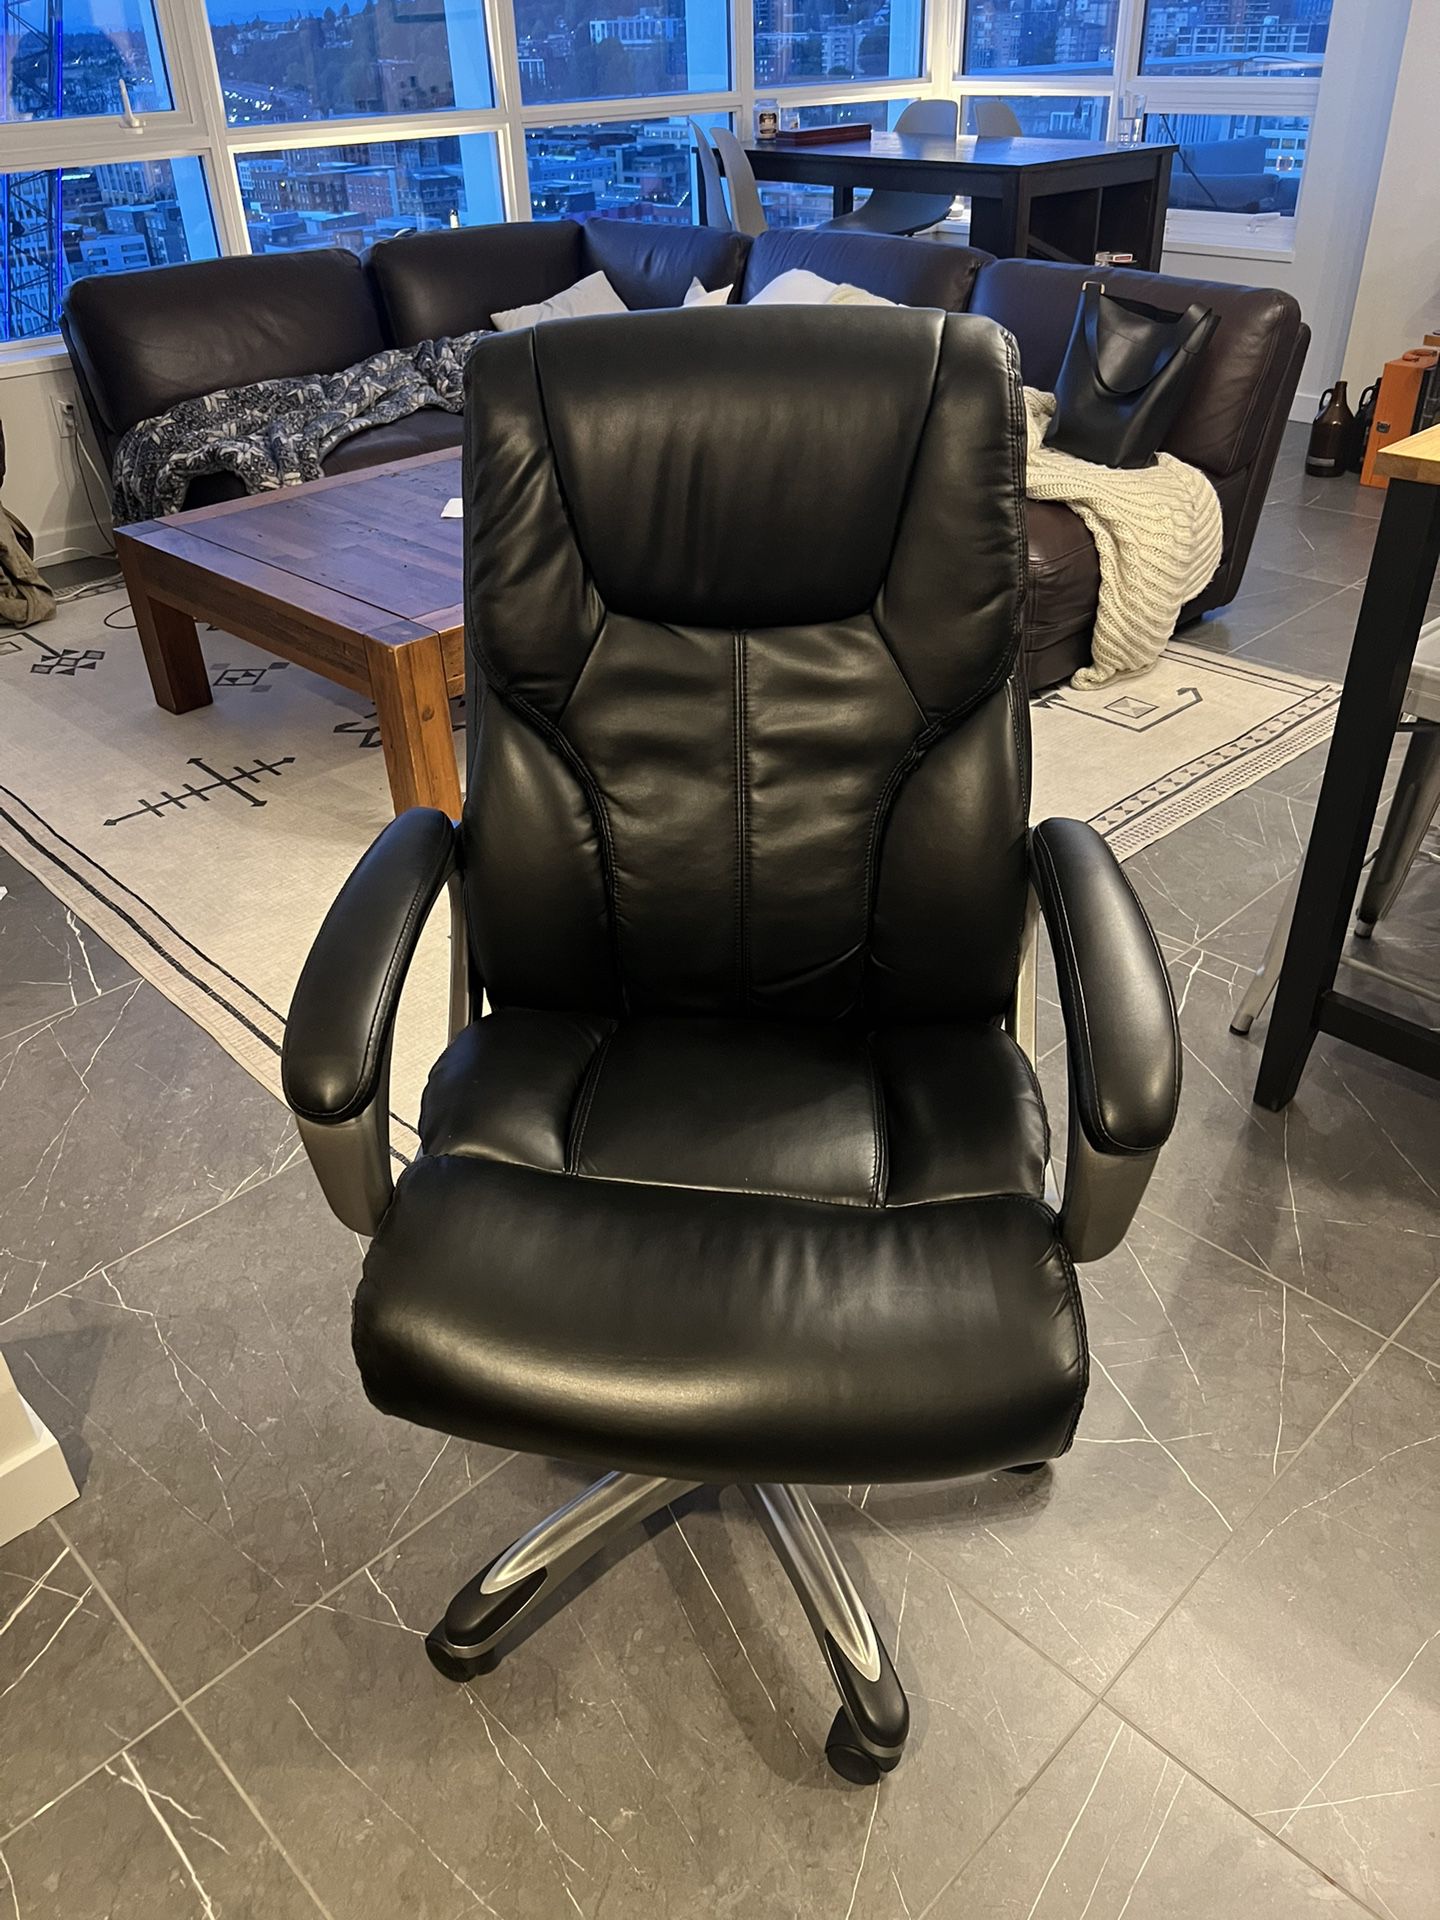 Office Chair - Amazon Basics High back Leather Executive Swivel Adjustable Office Chair